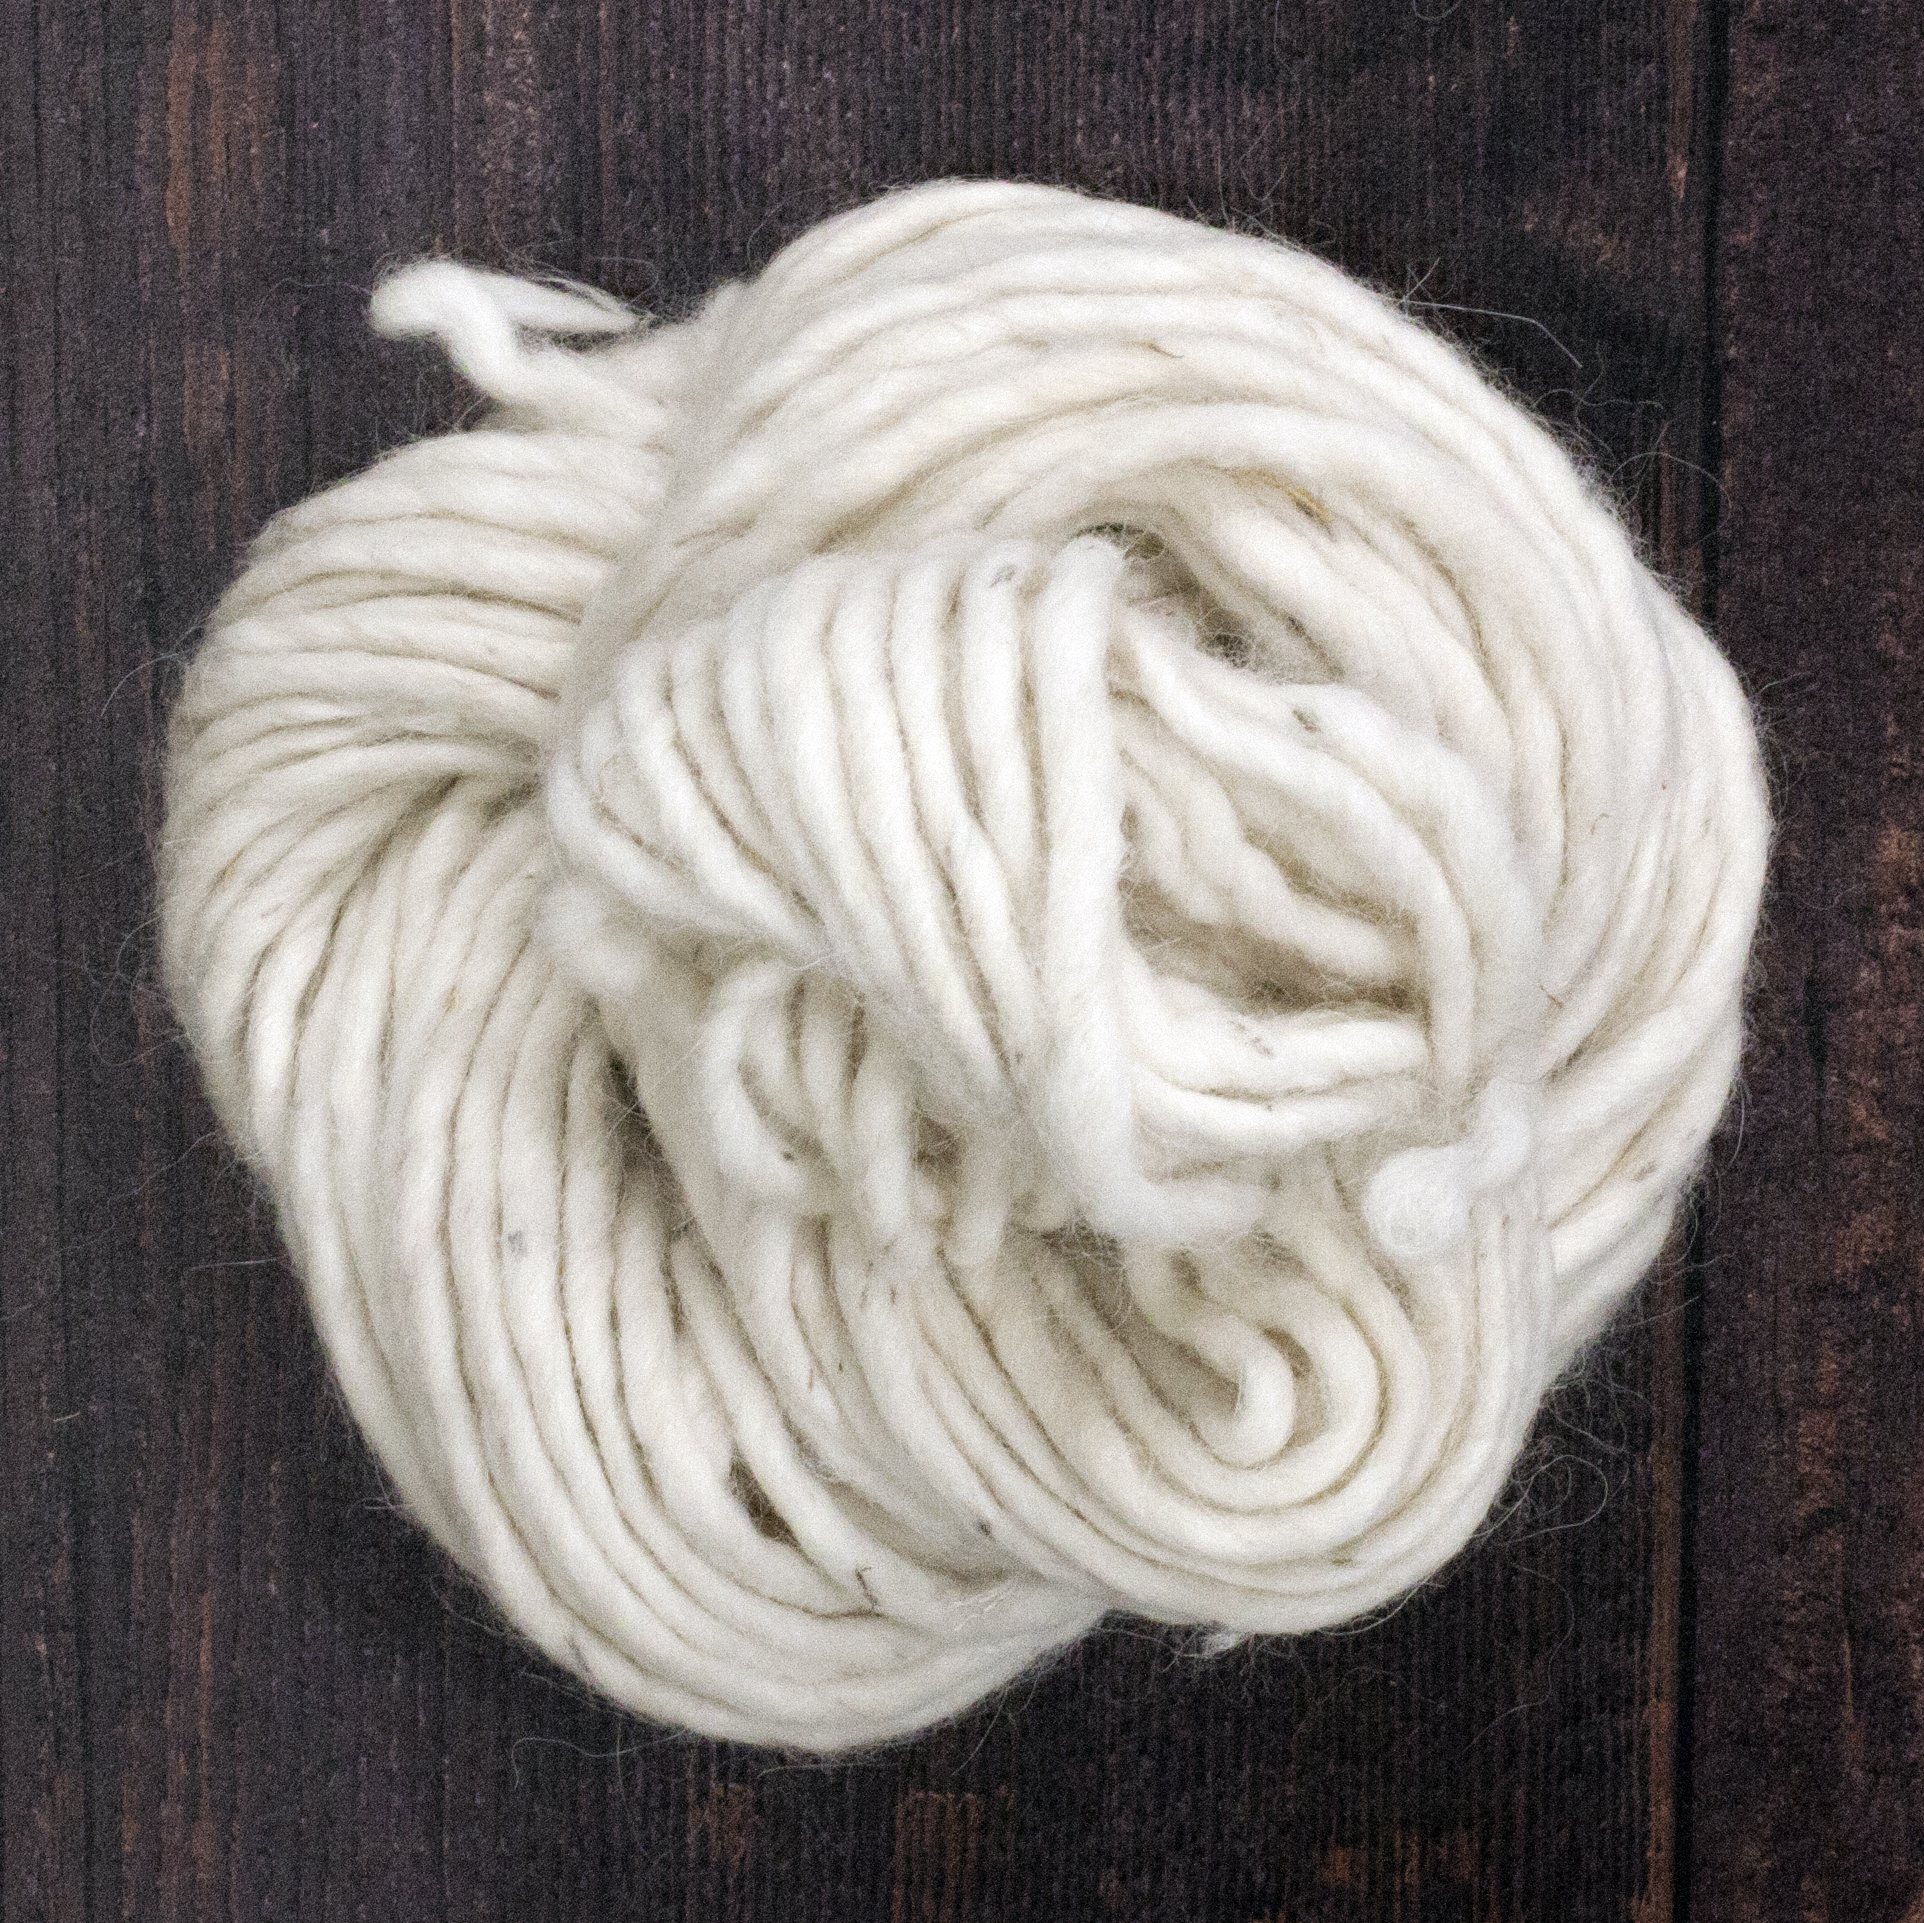 Pure White Super Chunky Yarn. Cheeky Chunky Yarn by Wool Couture. 200g  Skein Chunky Yarn in White. Pure Merino Wool. 